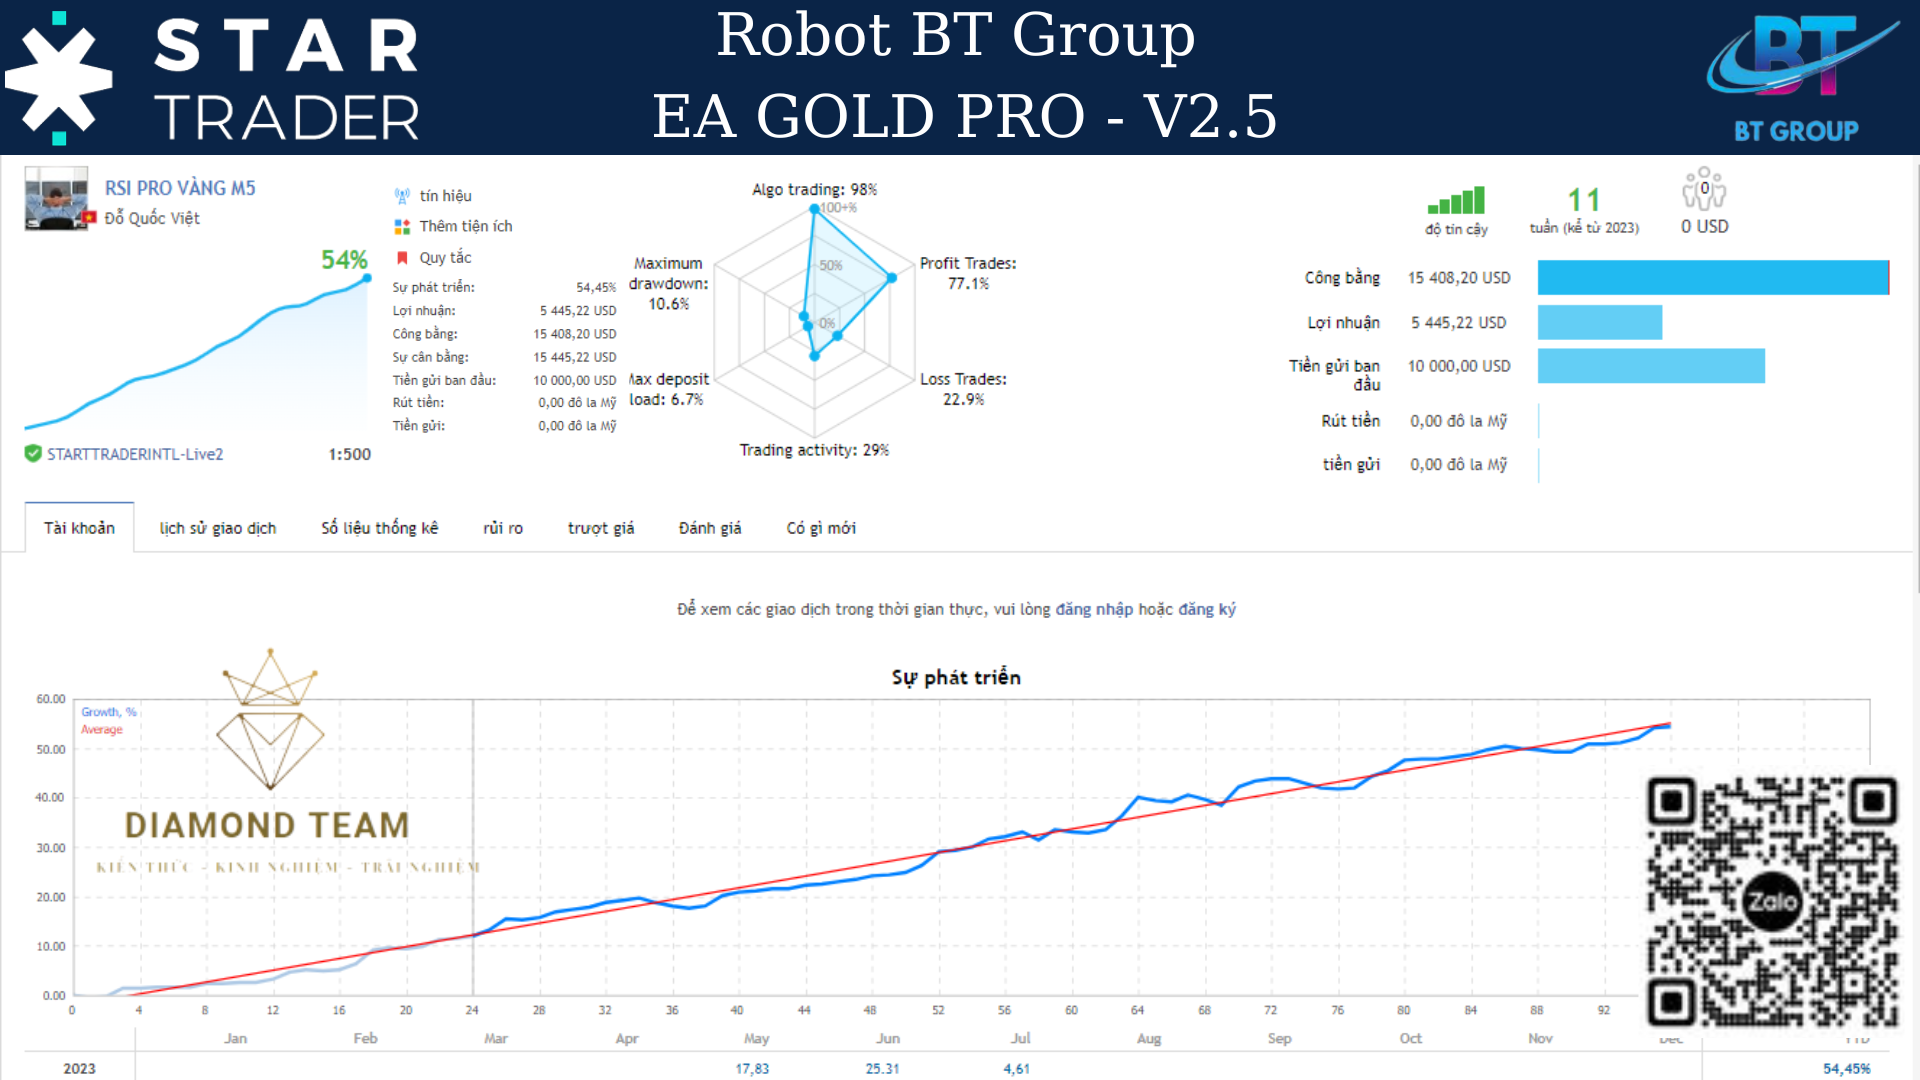 NEW VERSON ROBOT BT GROUP EA GOLD PRO V2.5